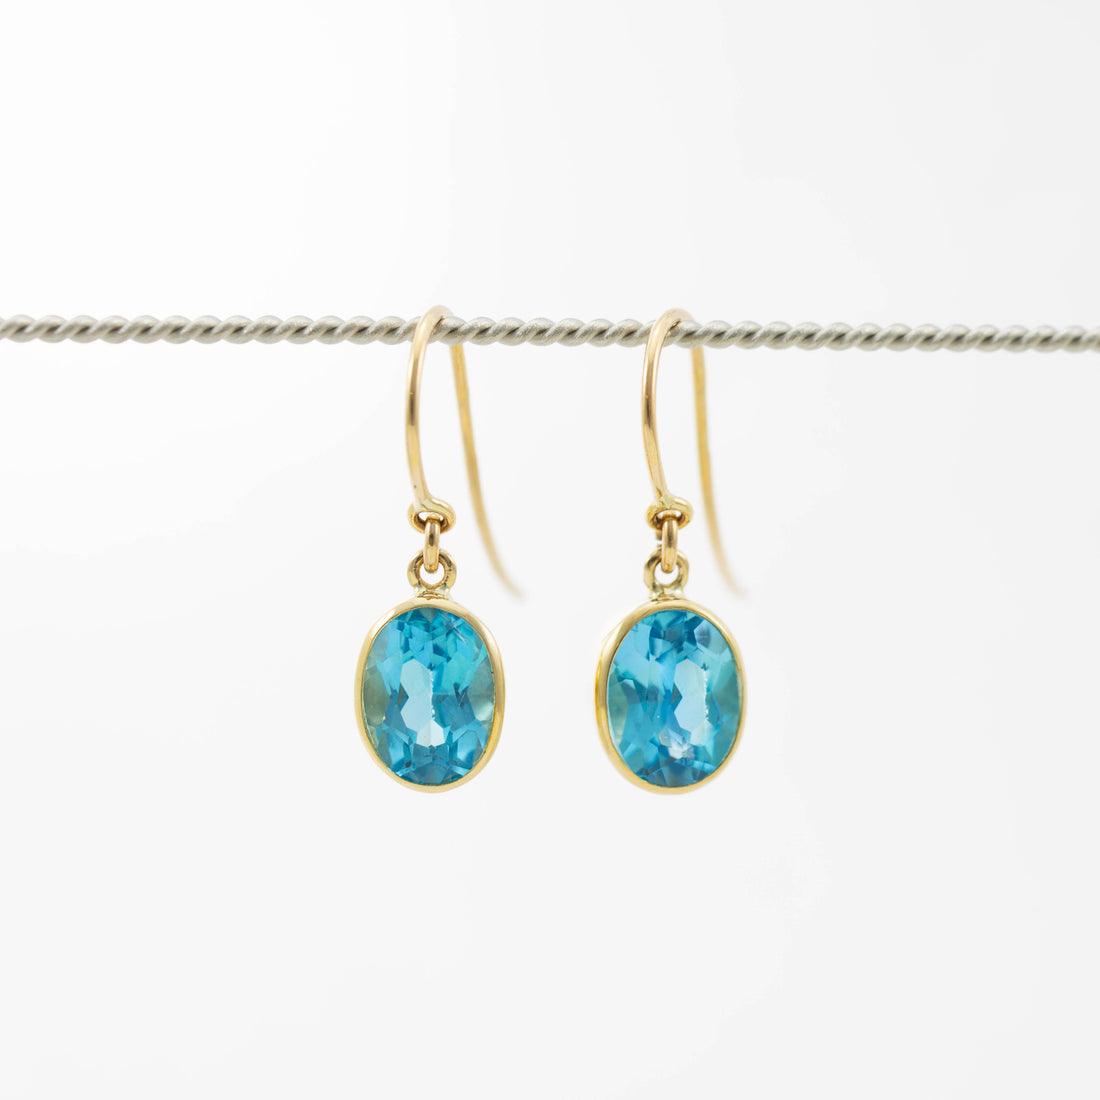 Simon Alexander 9ct Gold Blue Topaz Drop Earrings - Rococo Jewellery